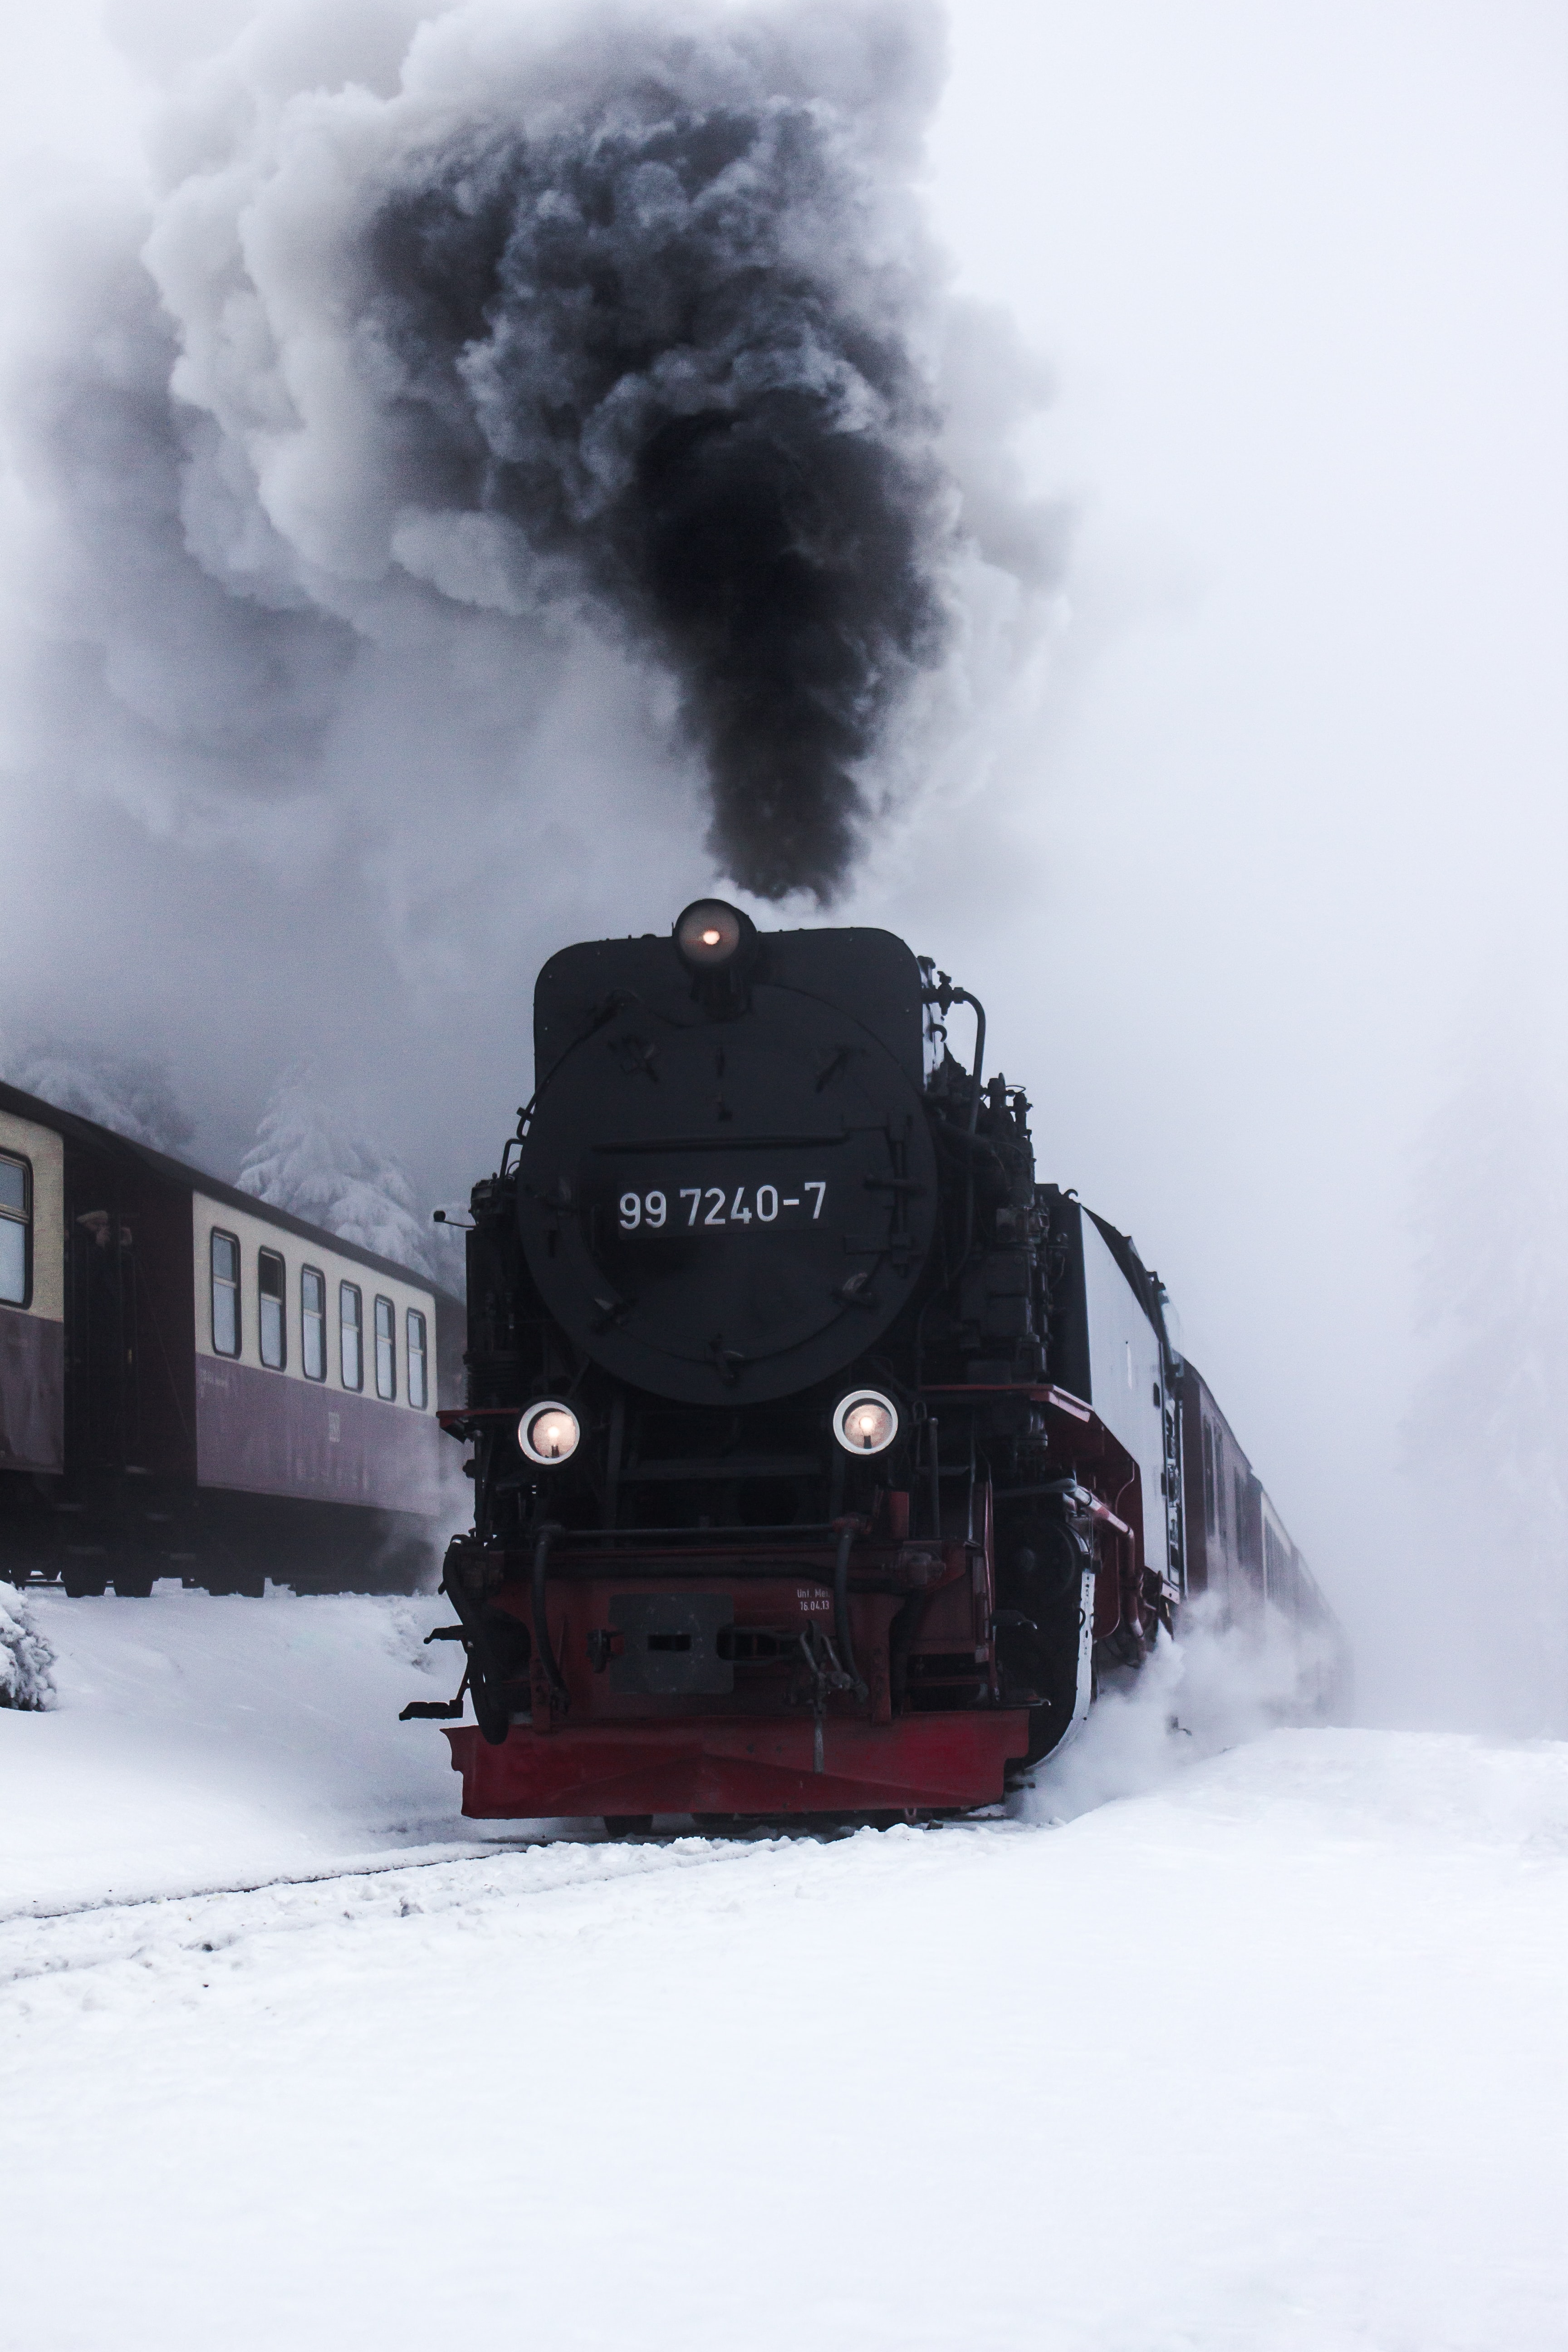 train, smoke, snow, black, miscellanea, miscellaneous, locomotive, steam locomotive